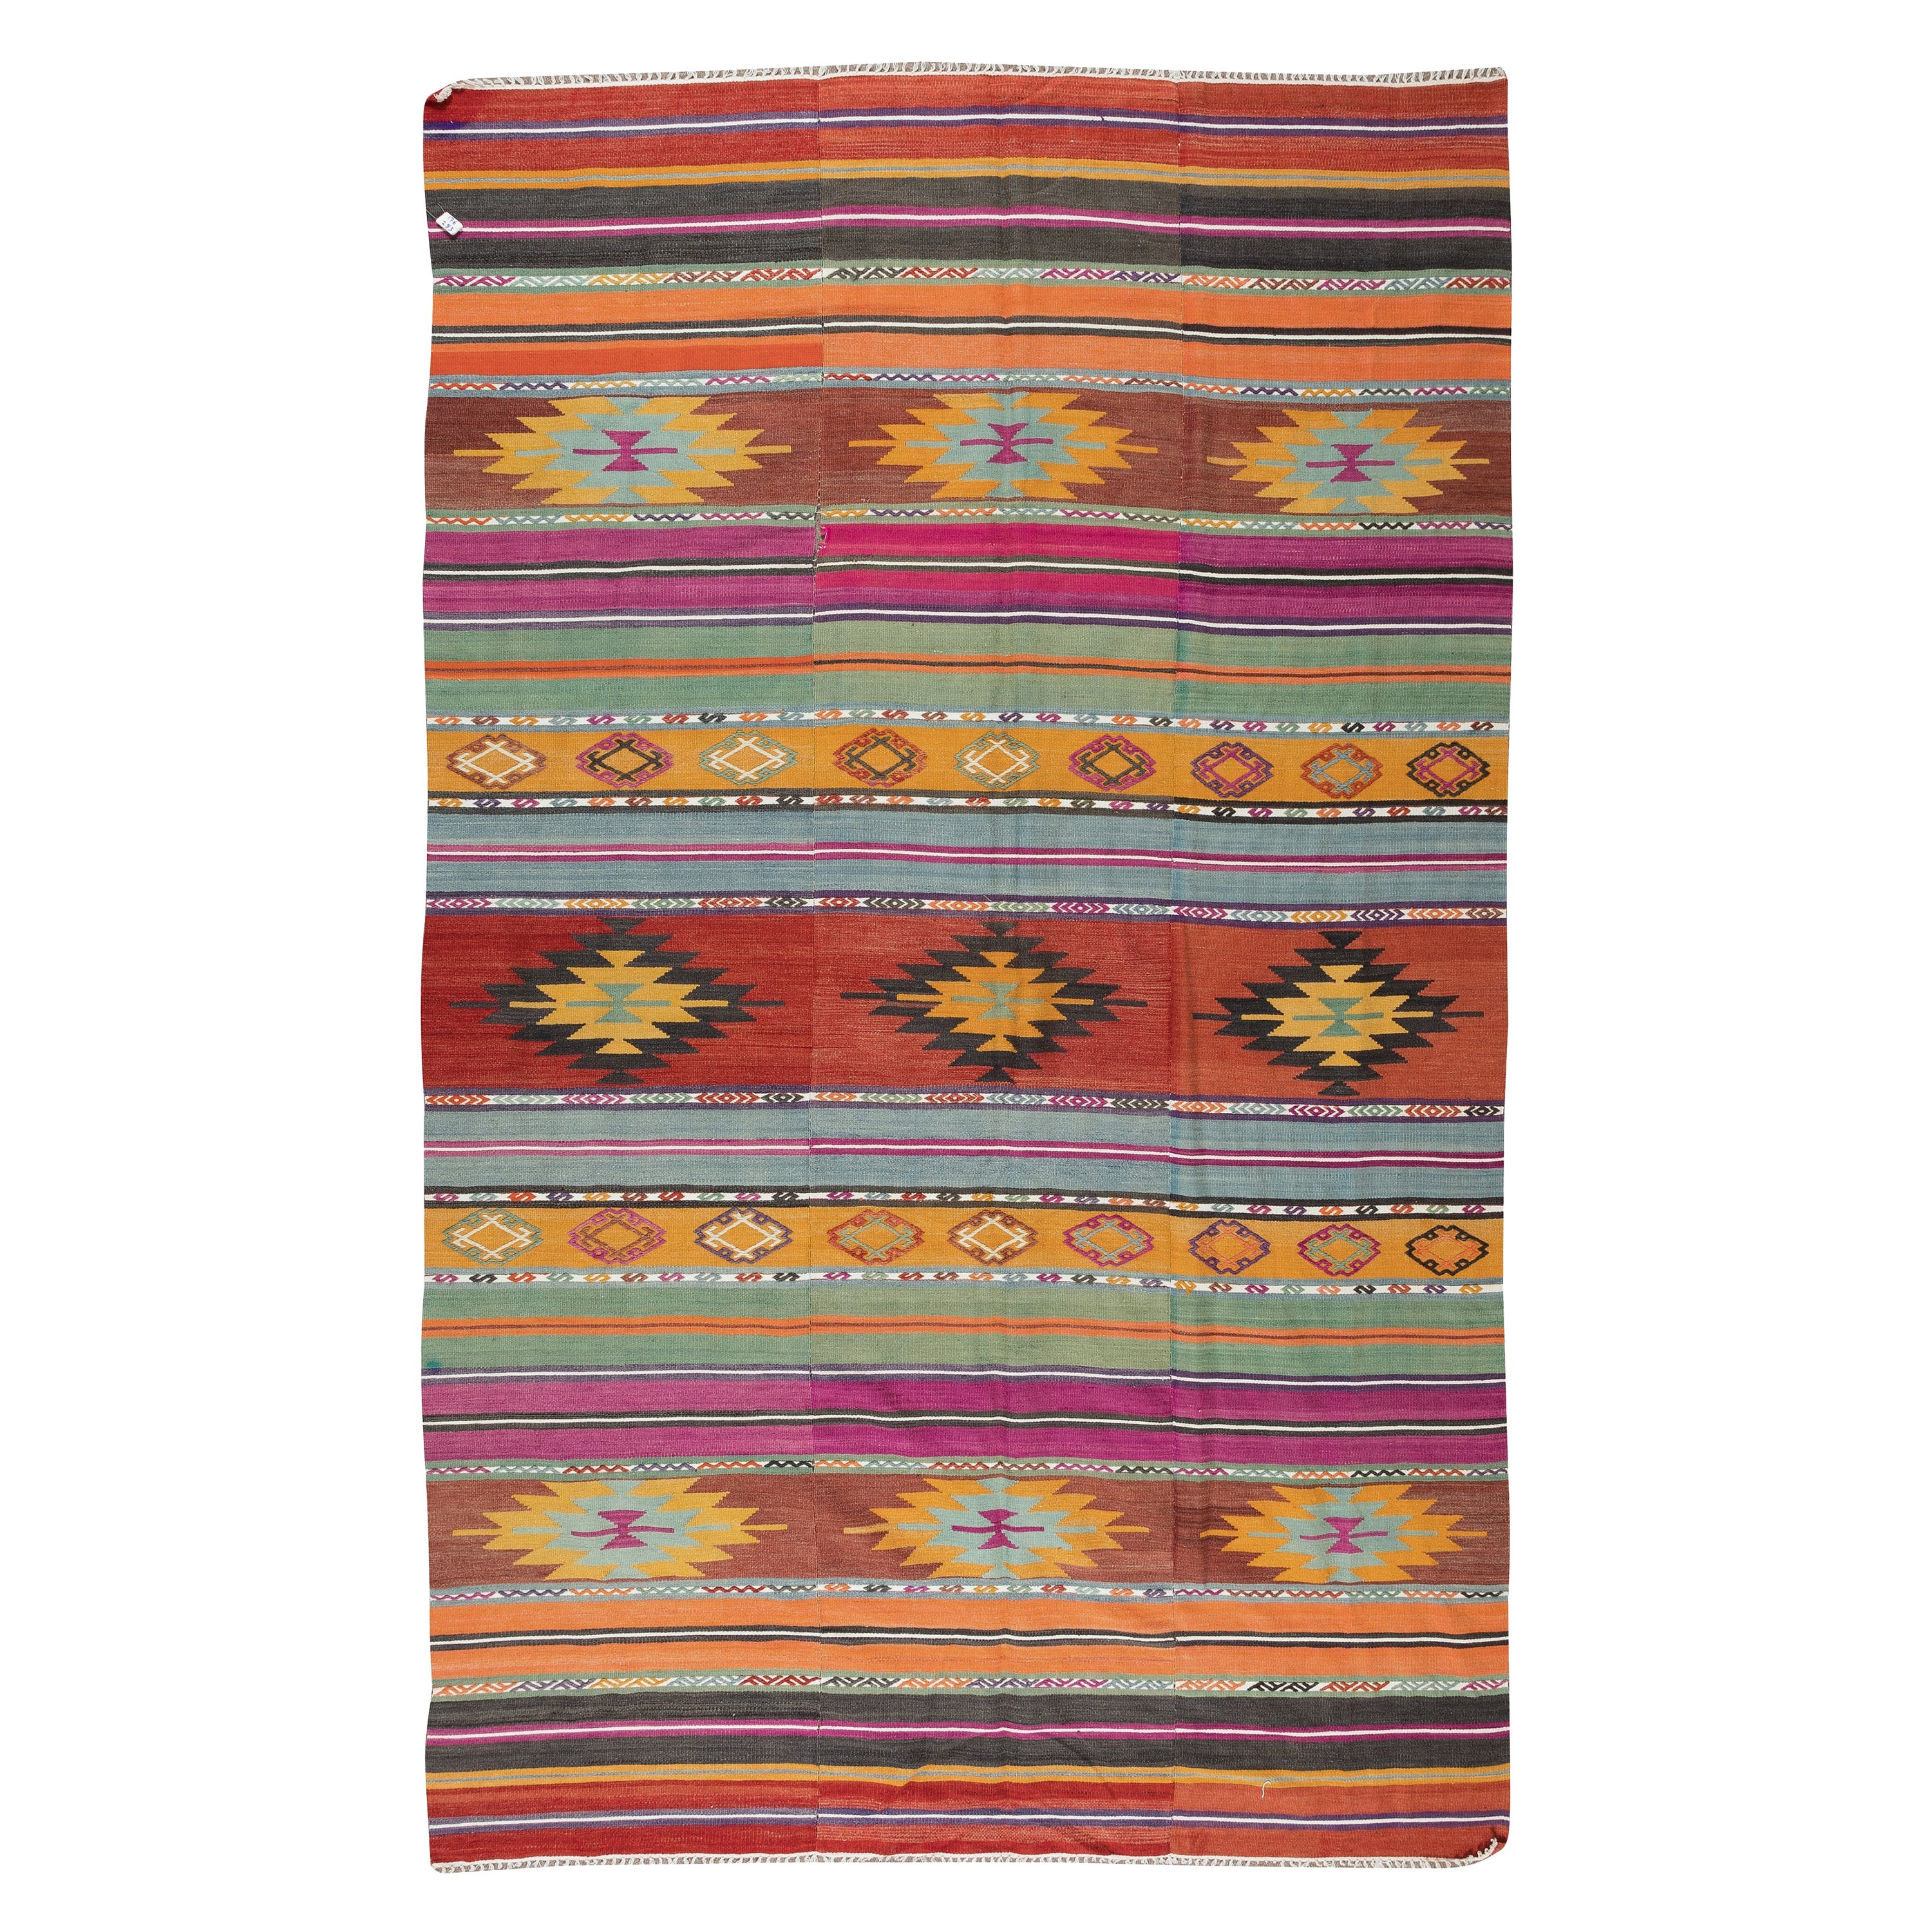 5.8x9.3 Ft Vintage Hand Woven Kilim, Colorful Rug, Turkish Carpet, 100% Wool For Sale